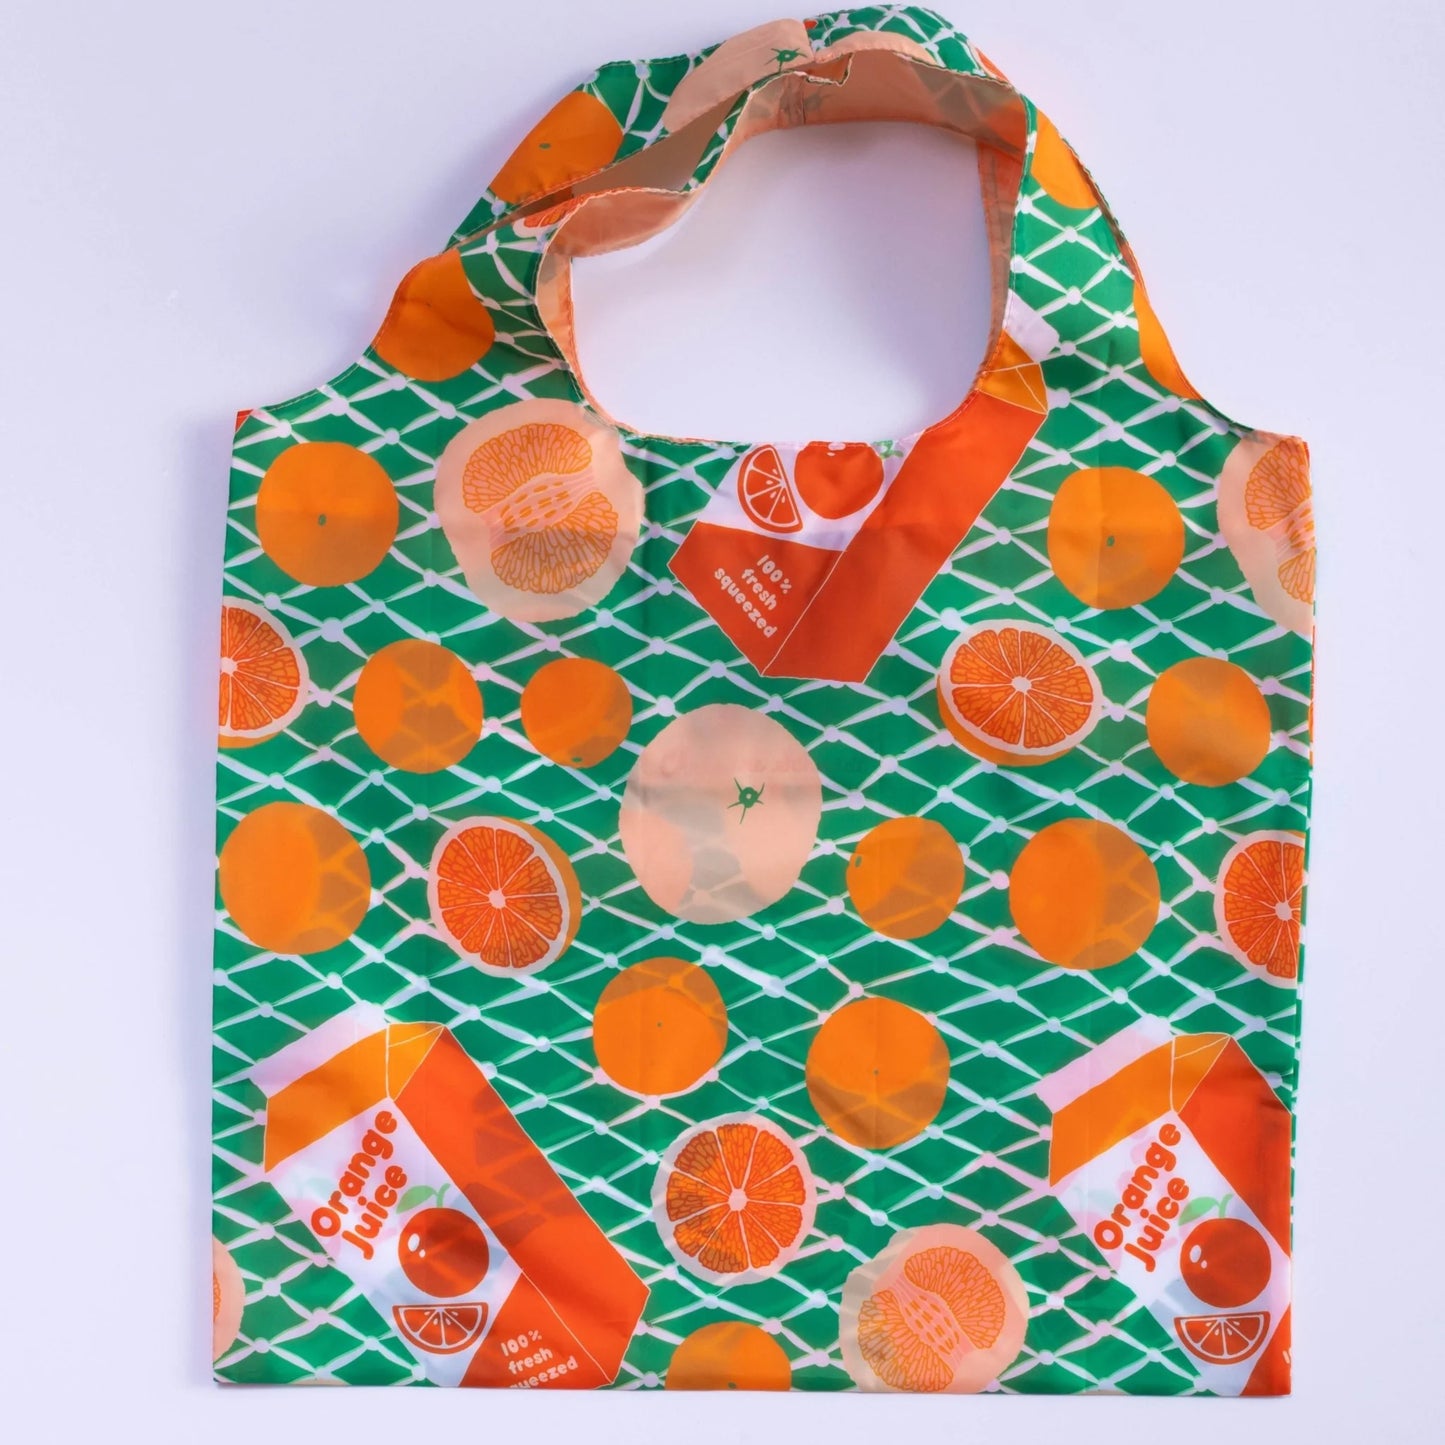 Oranges Art Sack x Christine Schmidt